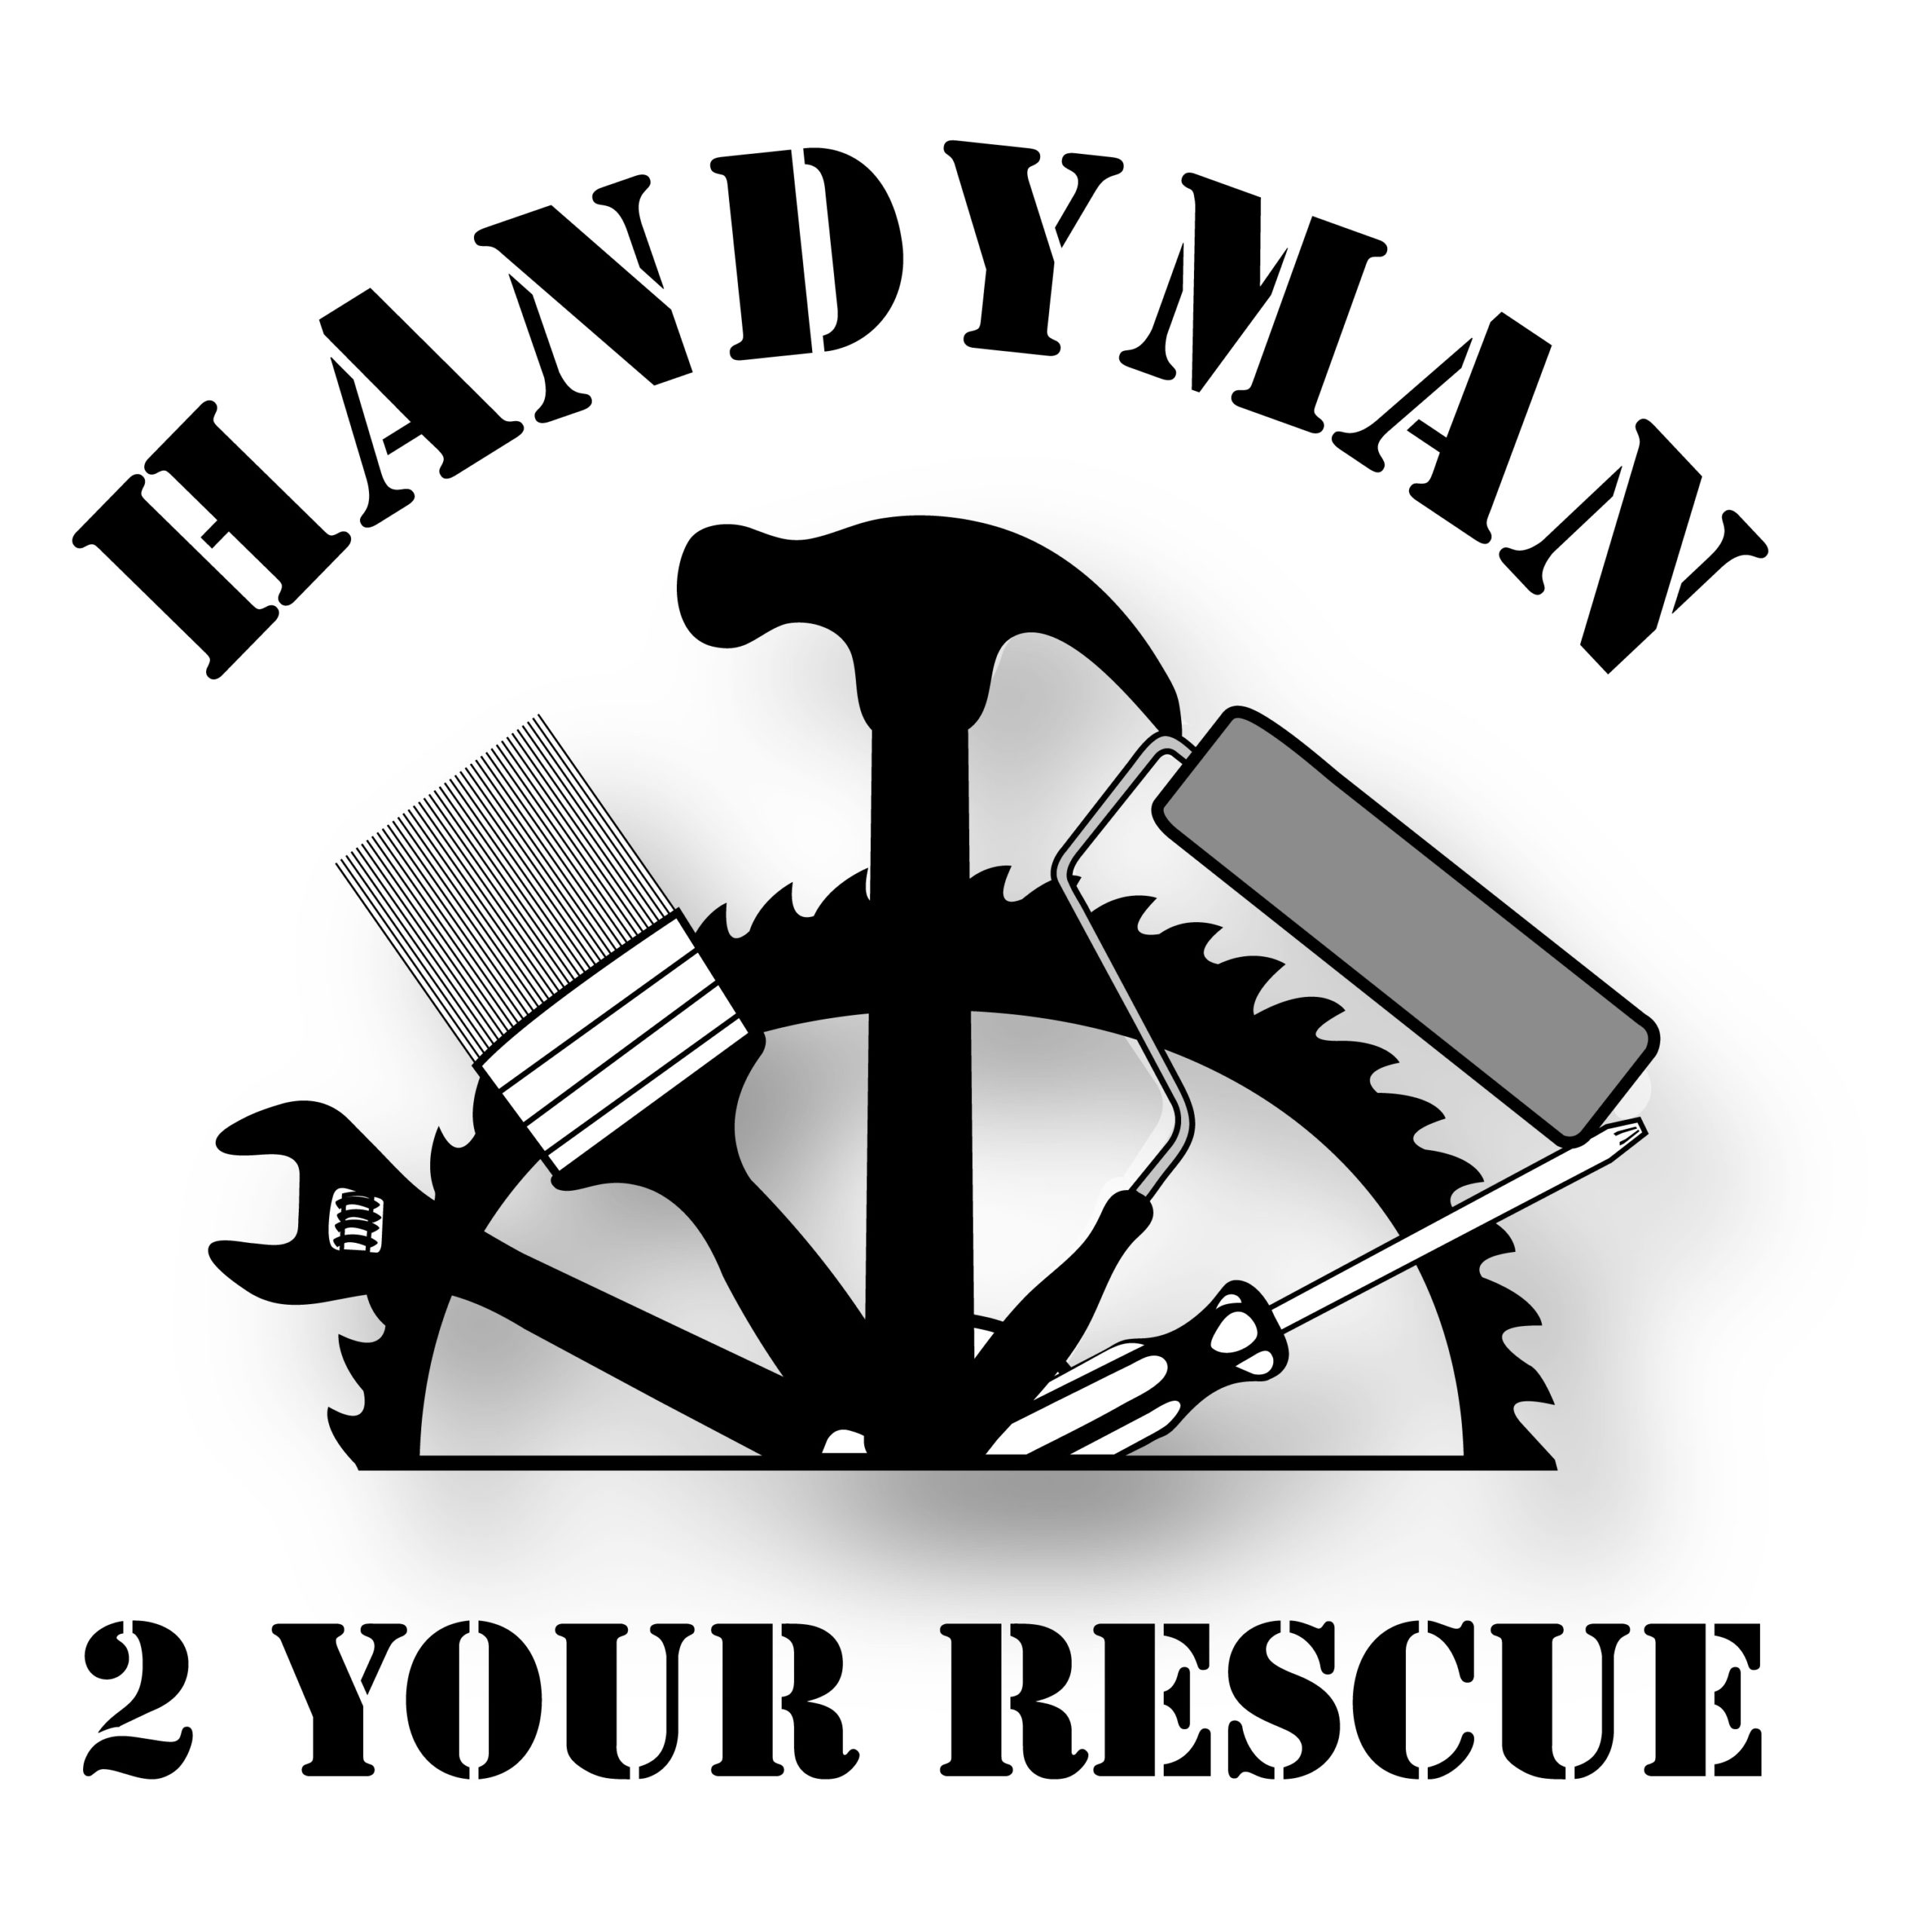 handyman logos for business cards 1